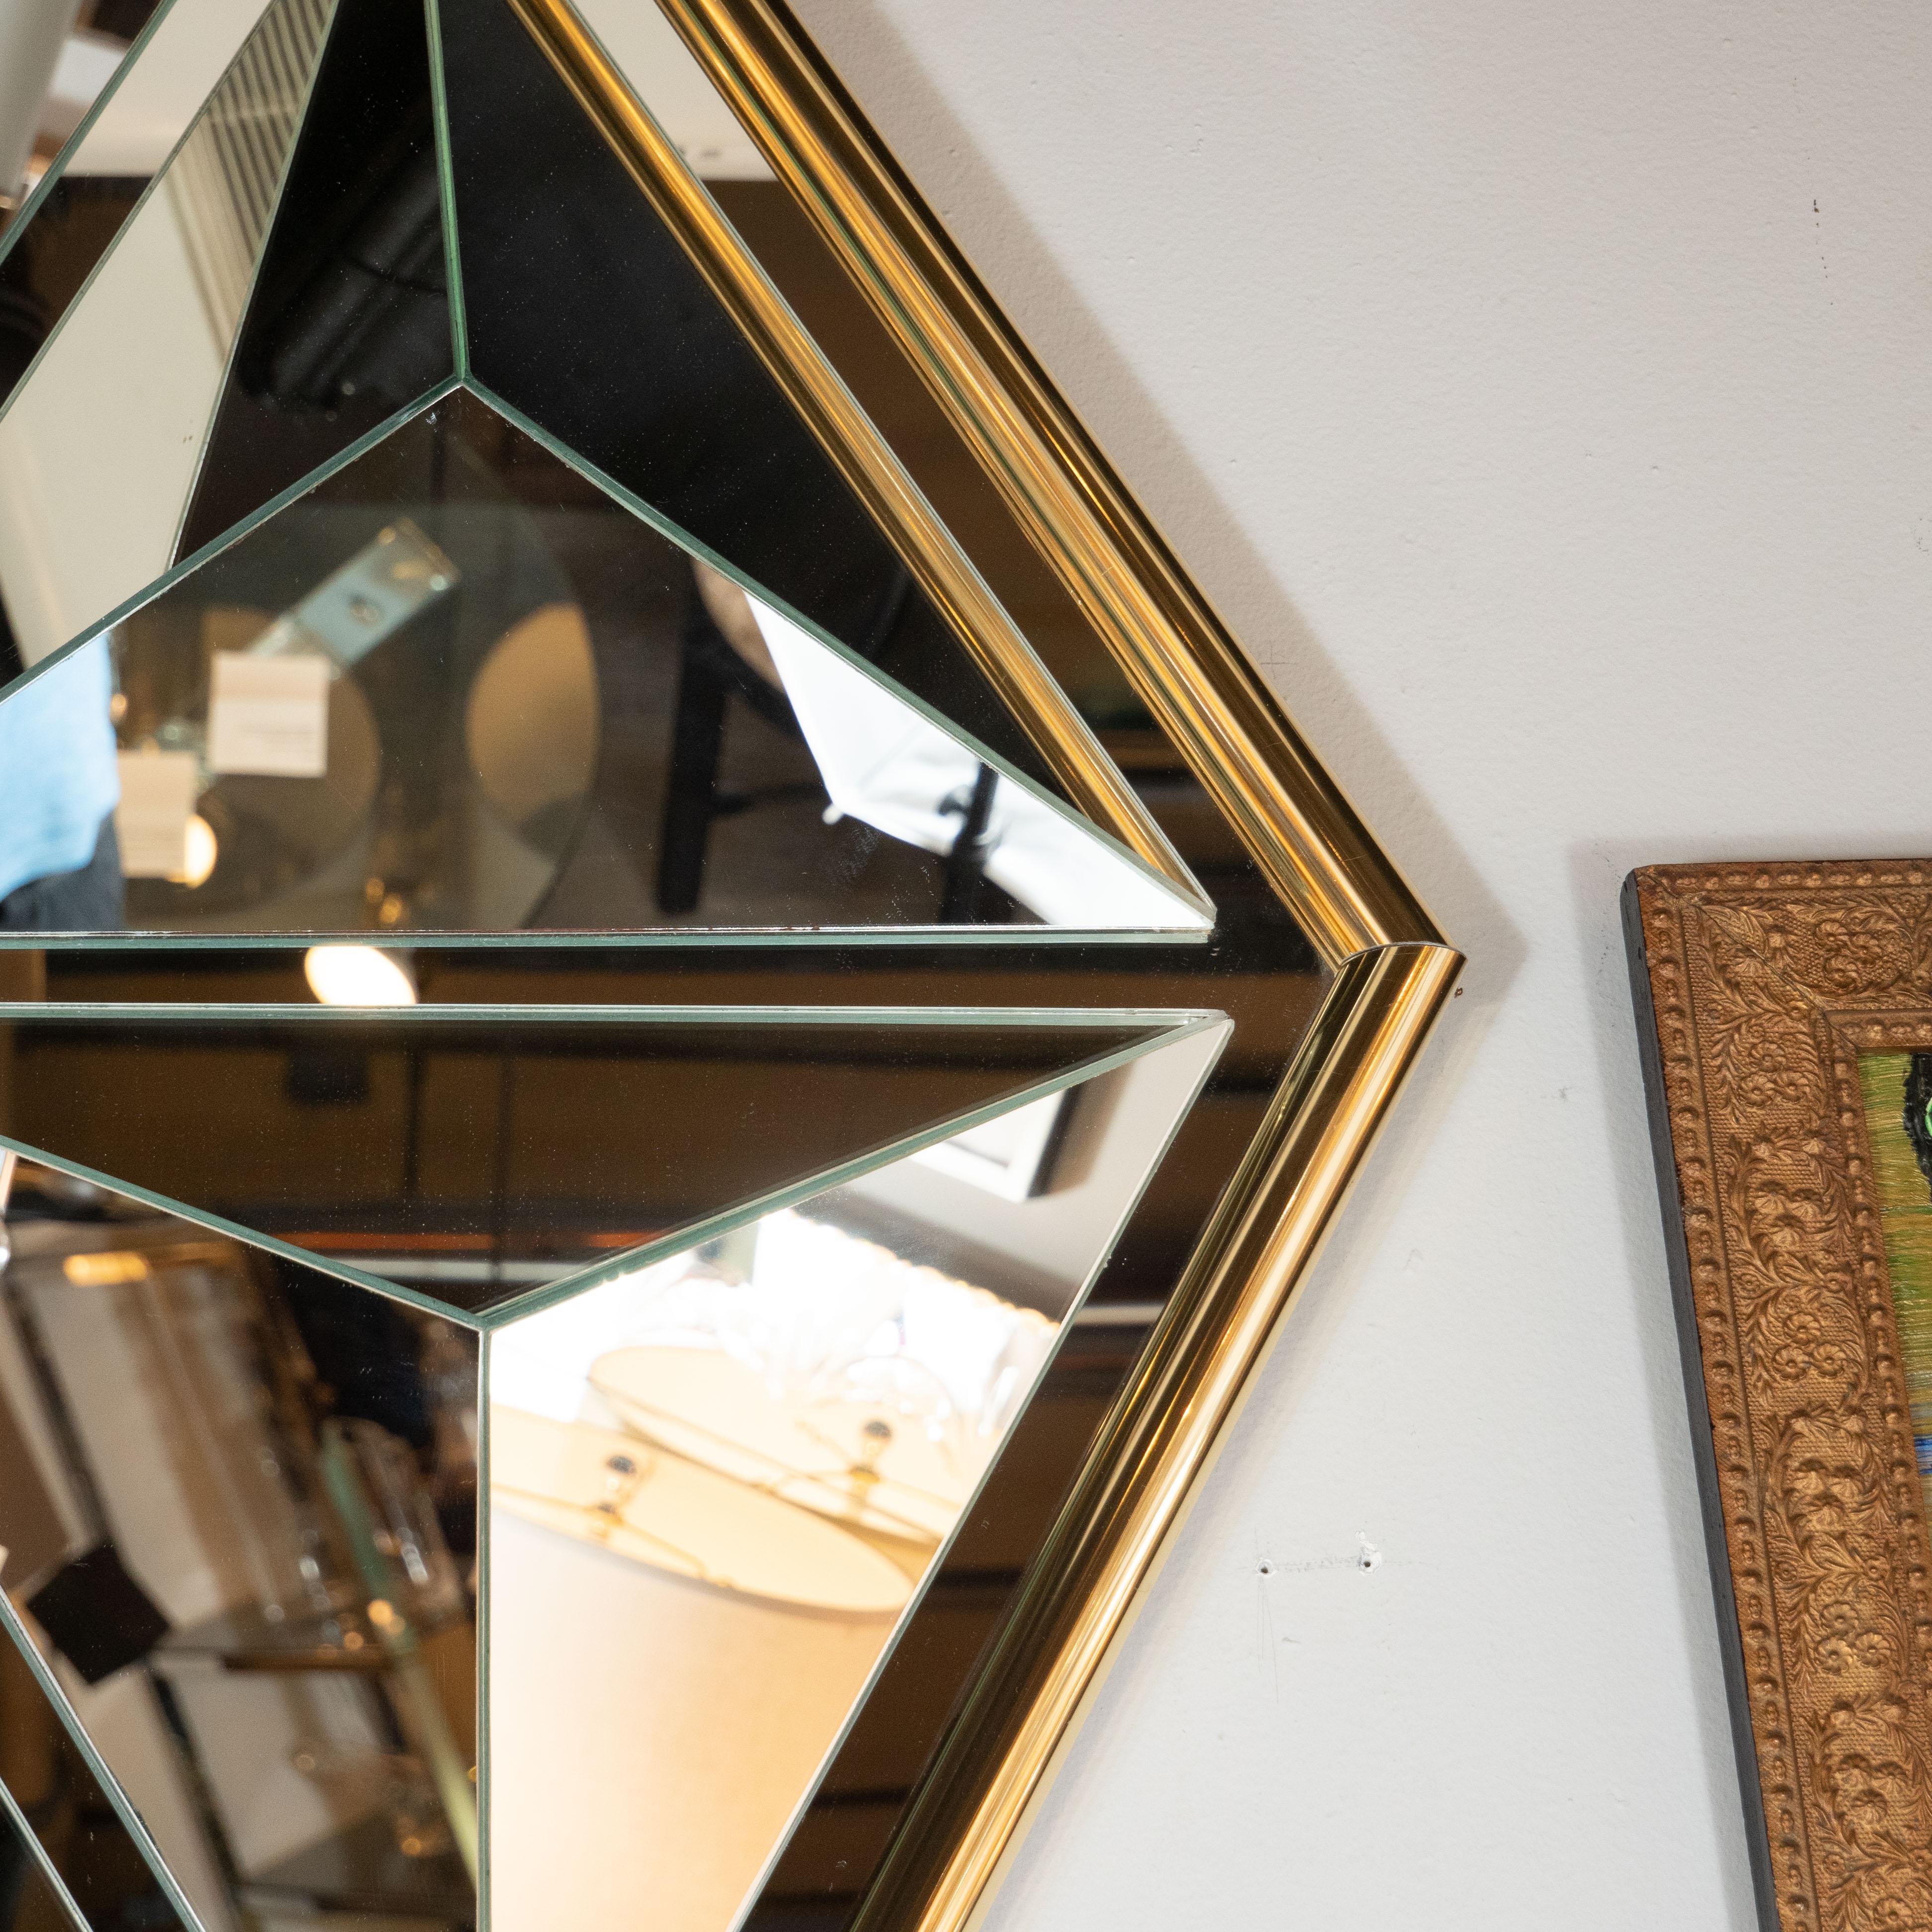 American Mid-Century Modern Sculptural Hexagonal Brass Mirror with Raised Pyramidal Forms